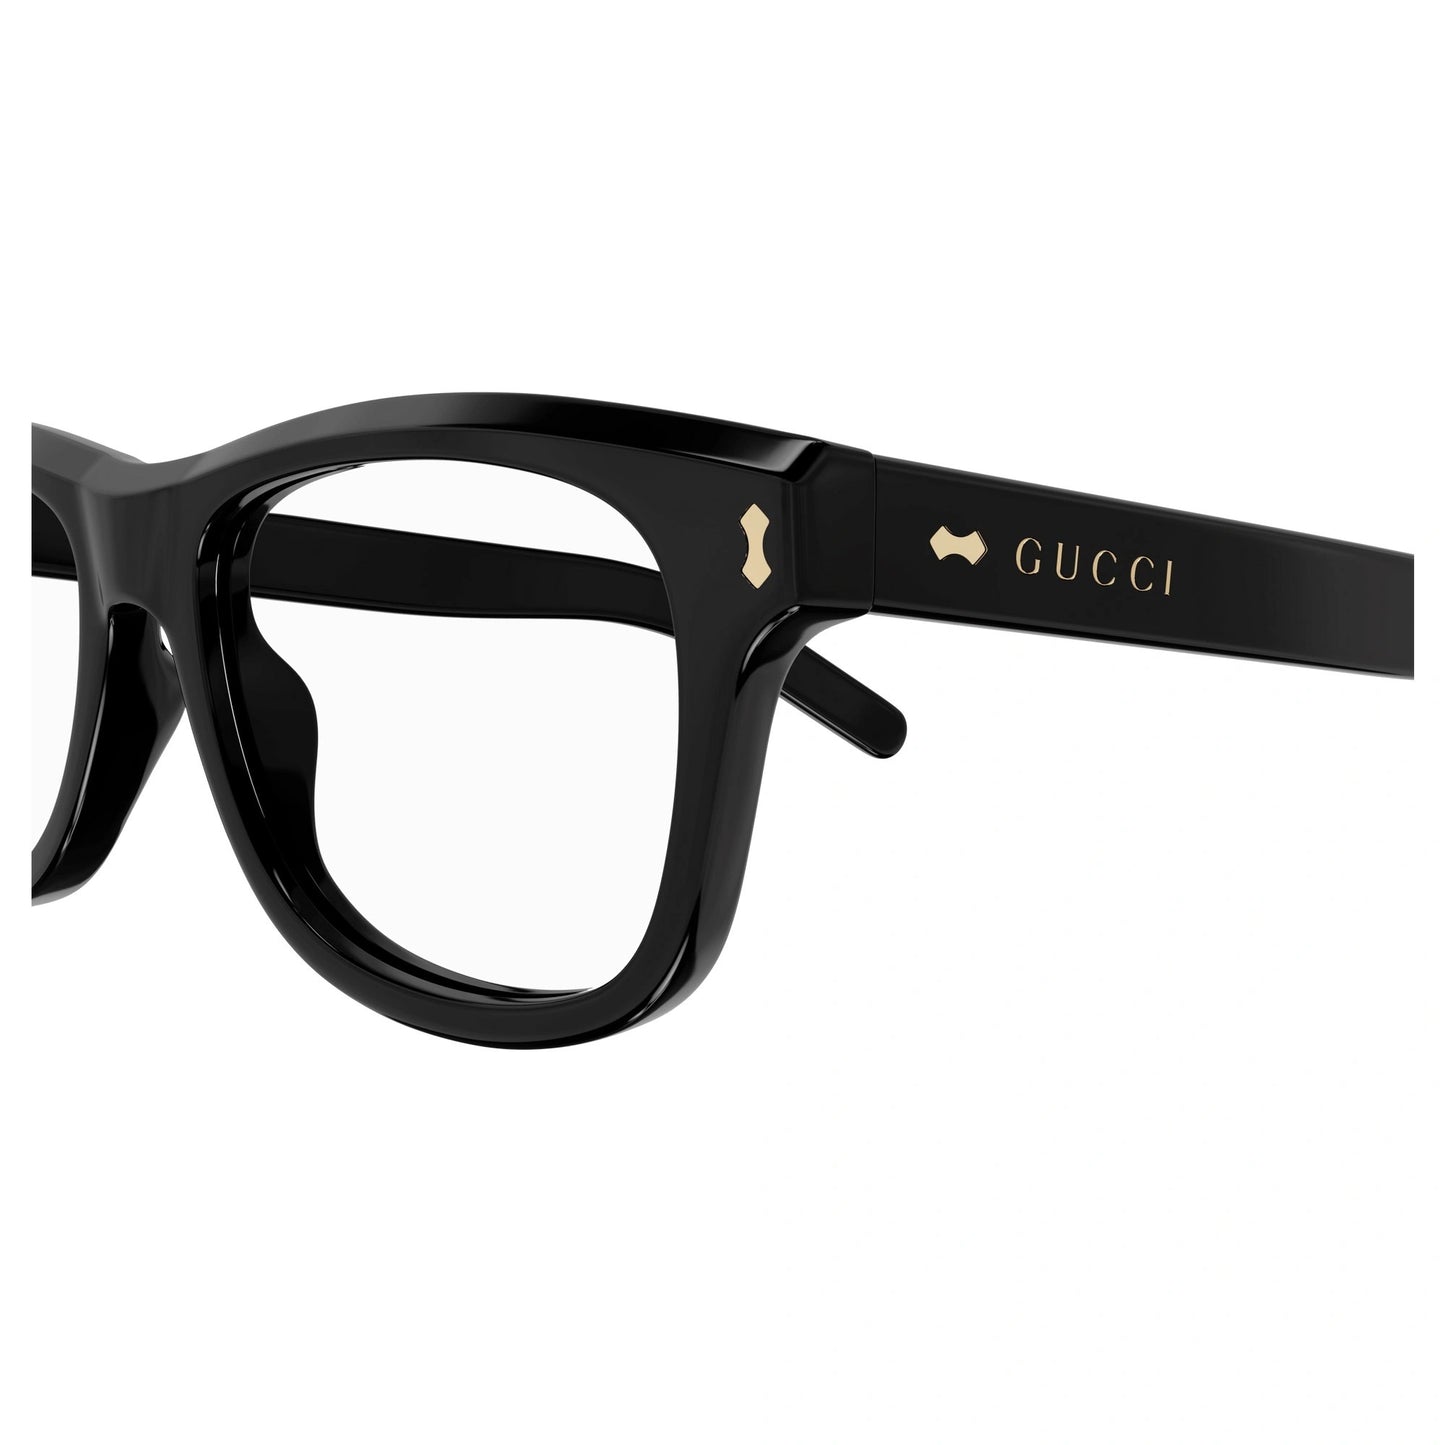 GUCCI GG1526o-001 52mm New Eyeglasses